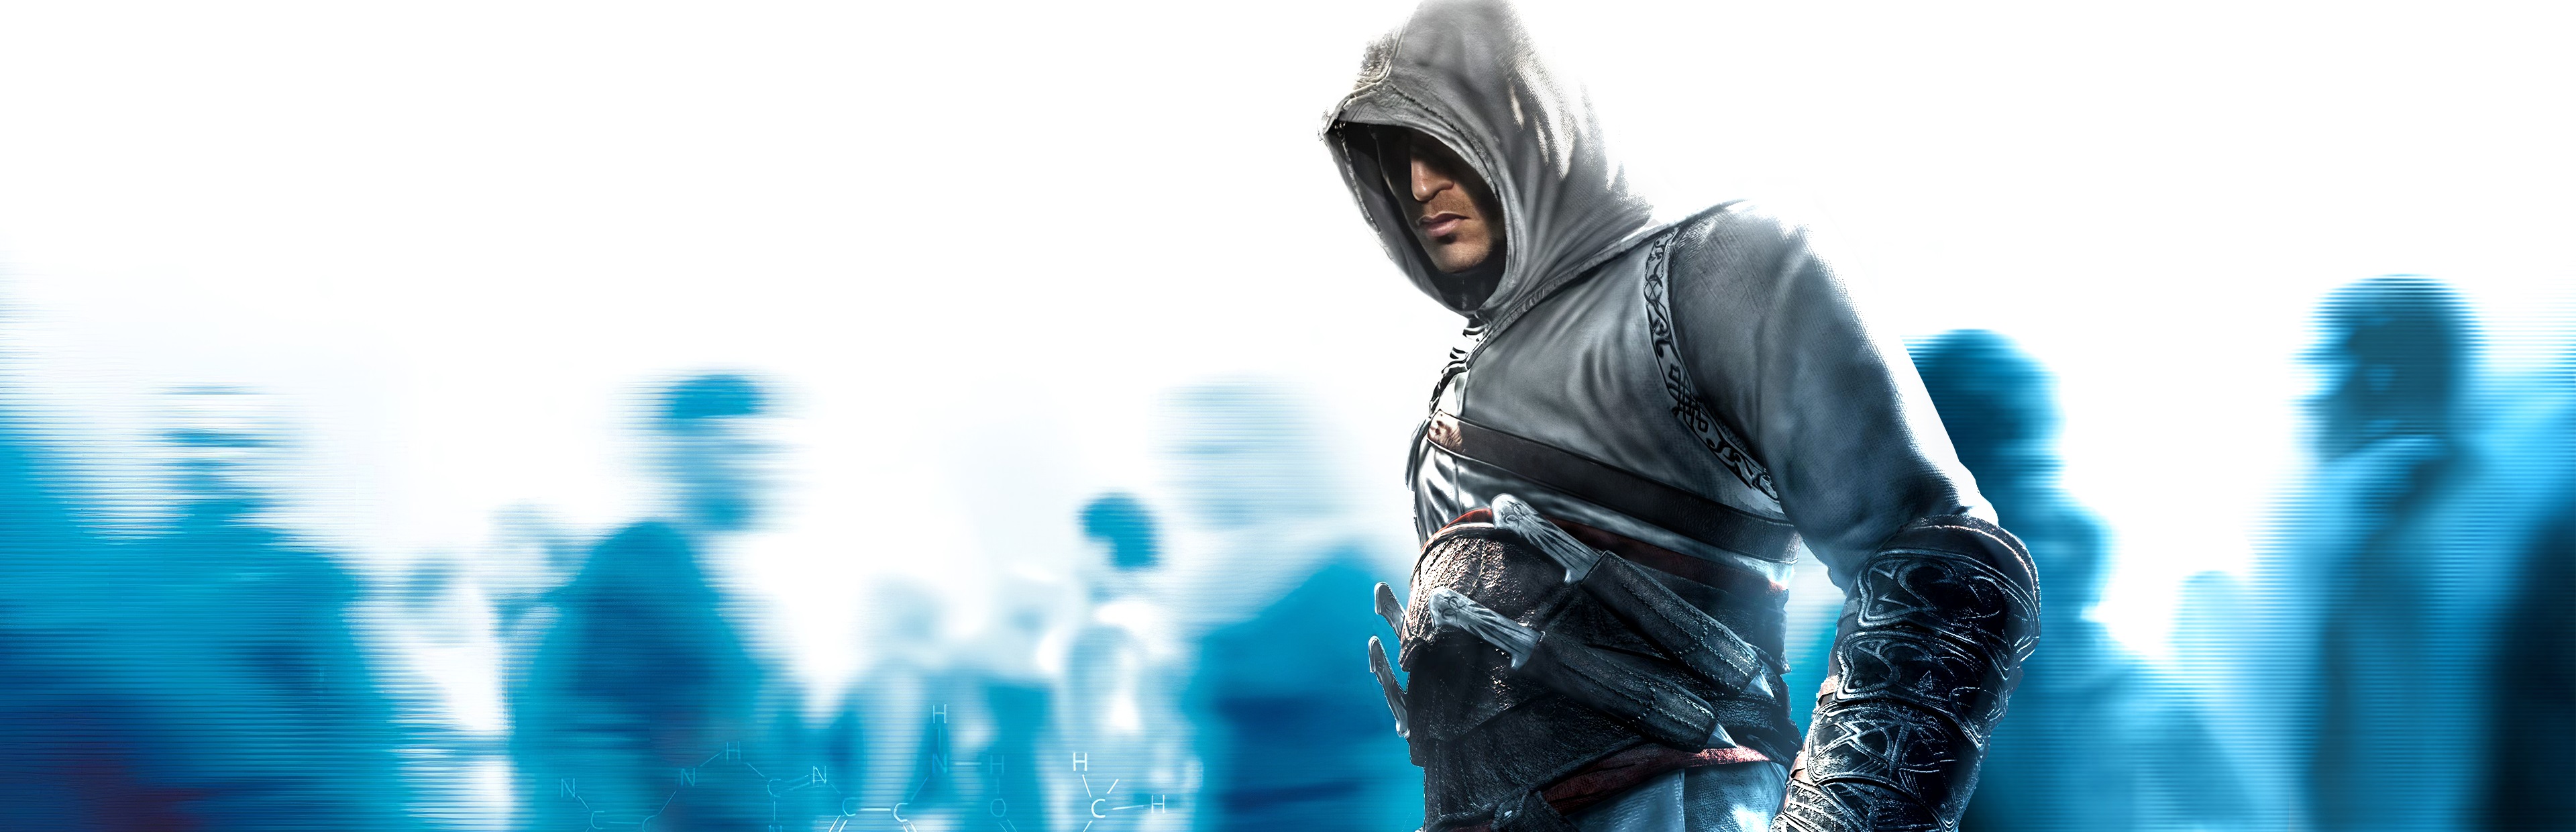 Assassin s 2007. Assassin's Creed 1 обложка. Ассасин Крид 2007. Assassin's Creed 1 обложка игры.